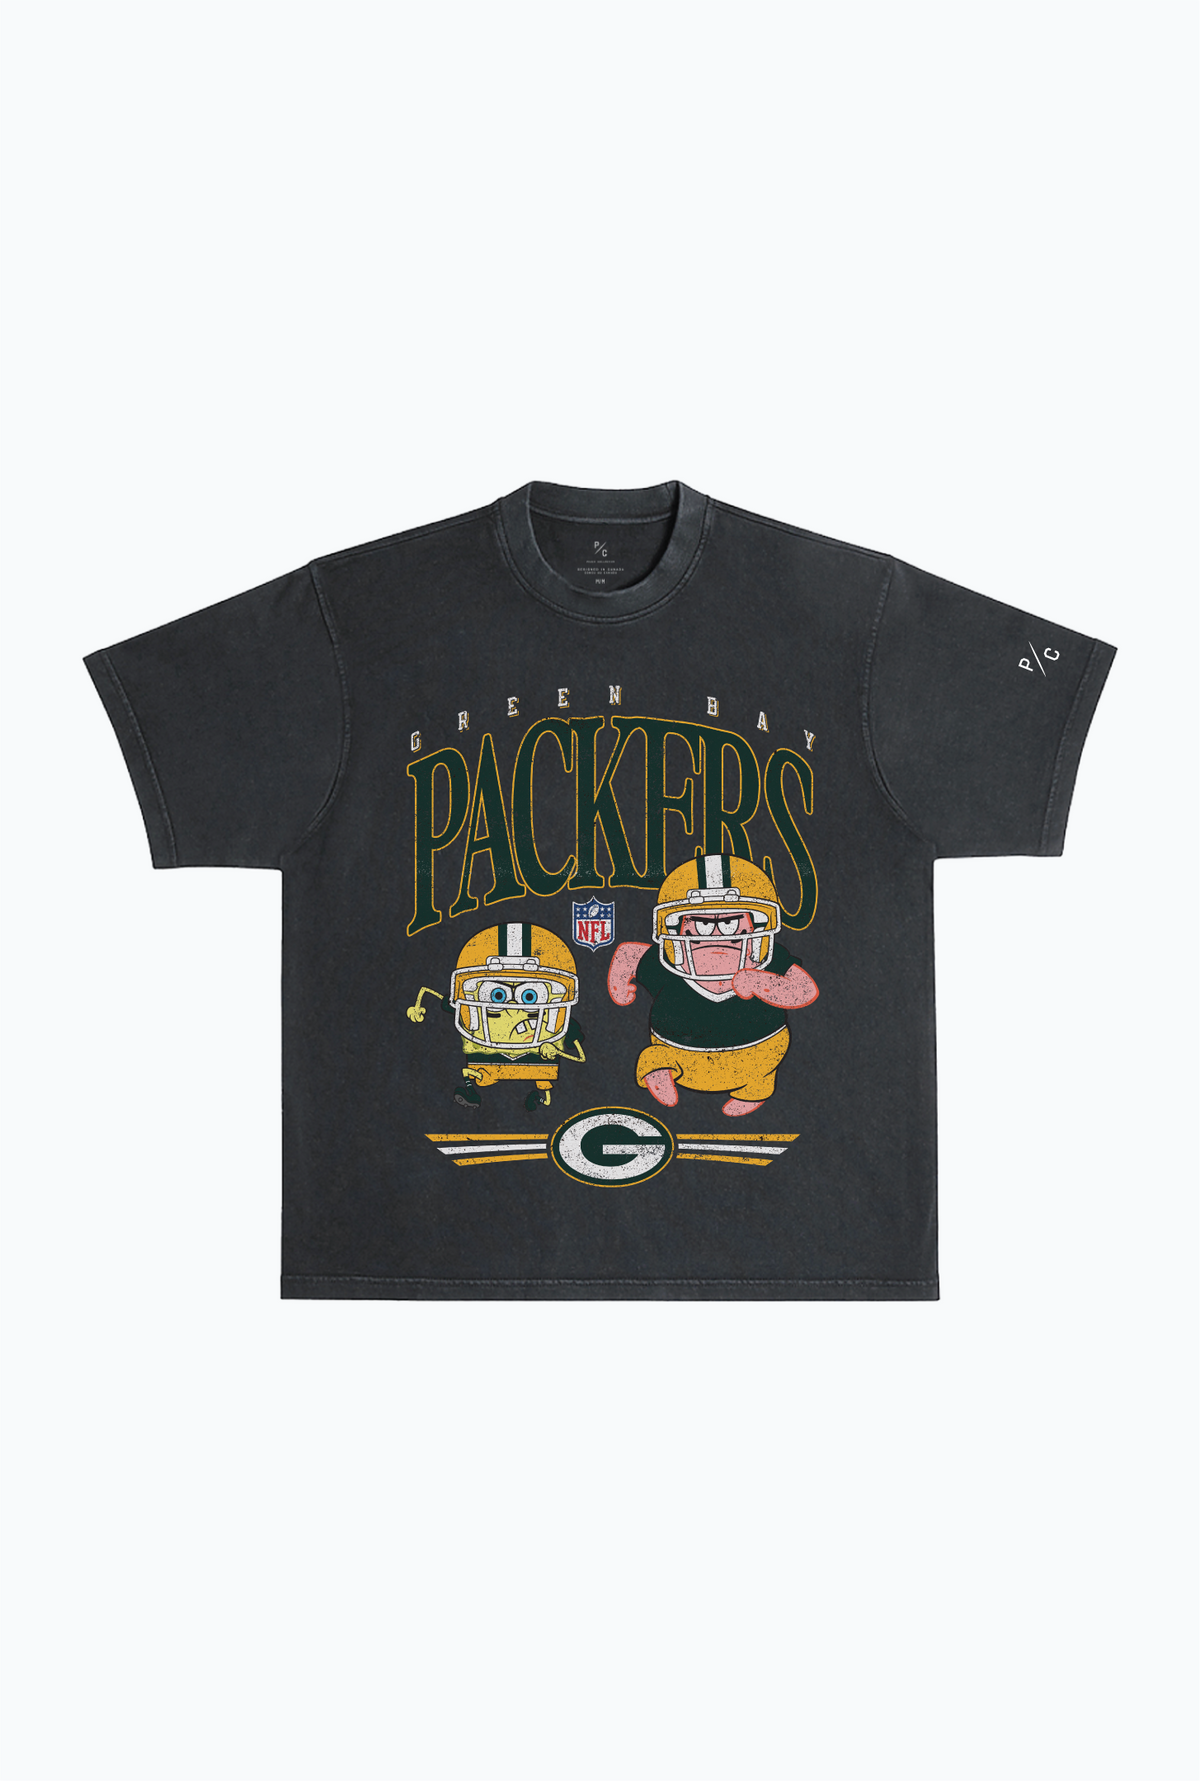 Spongebob & Patrick Rush Heavy Pigment Dye T-Shirt - Green Bay Packers